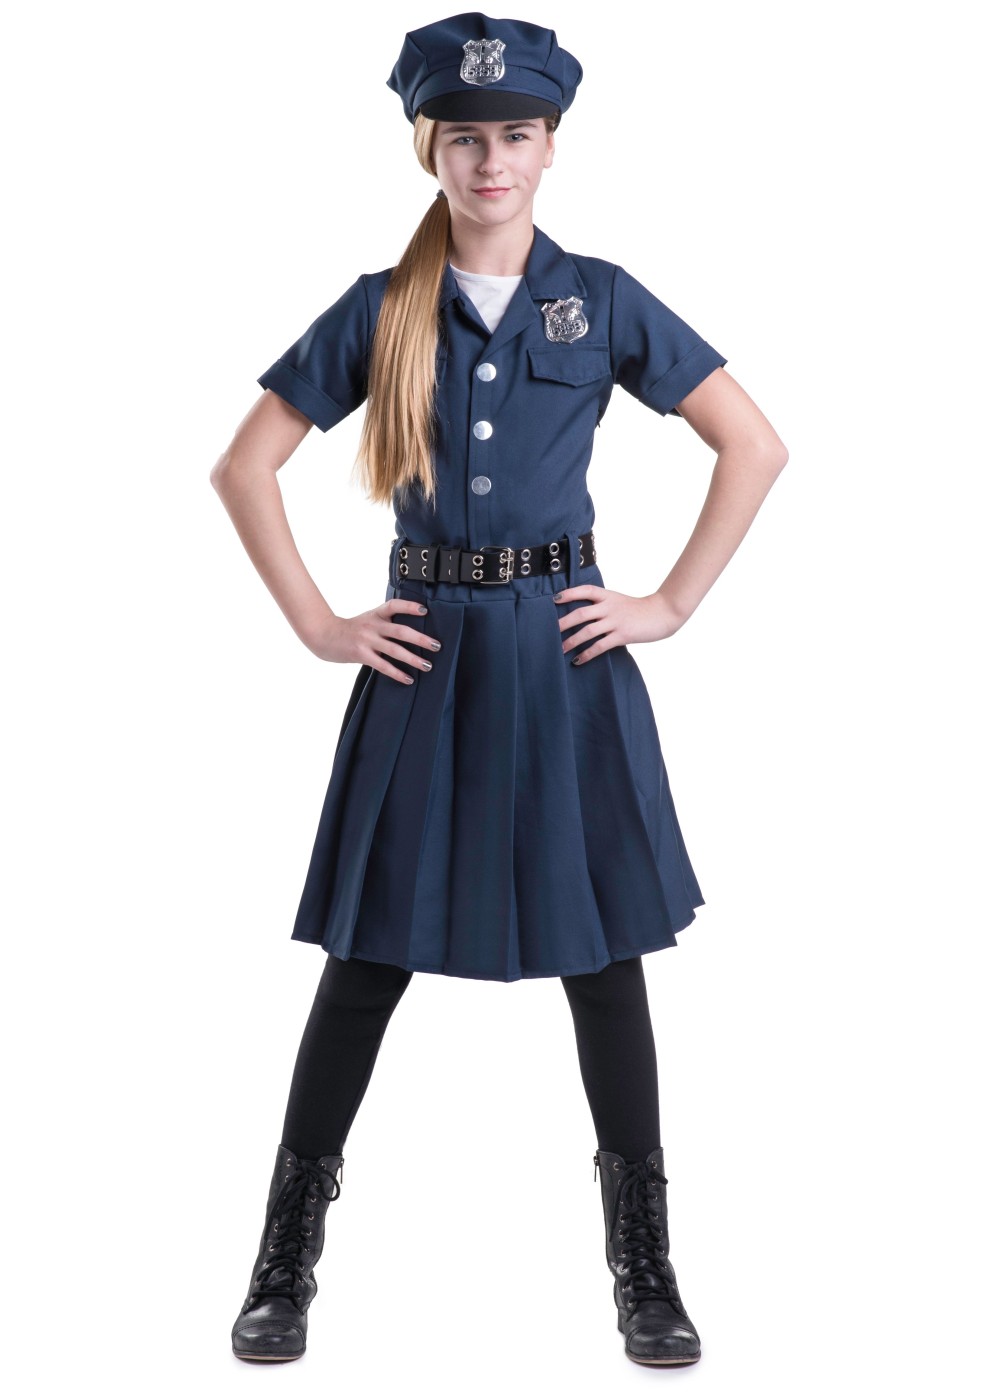 Police Girls Dress Costume - Professional Costumes